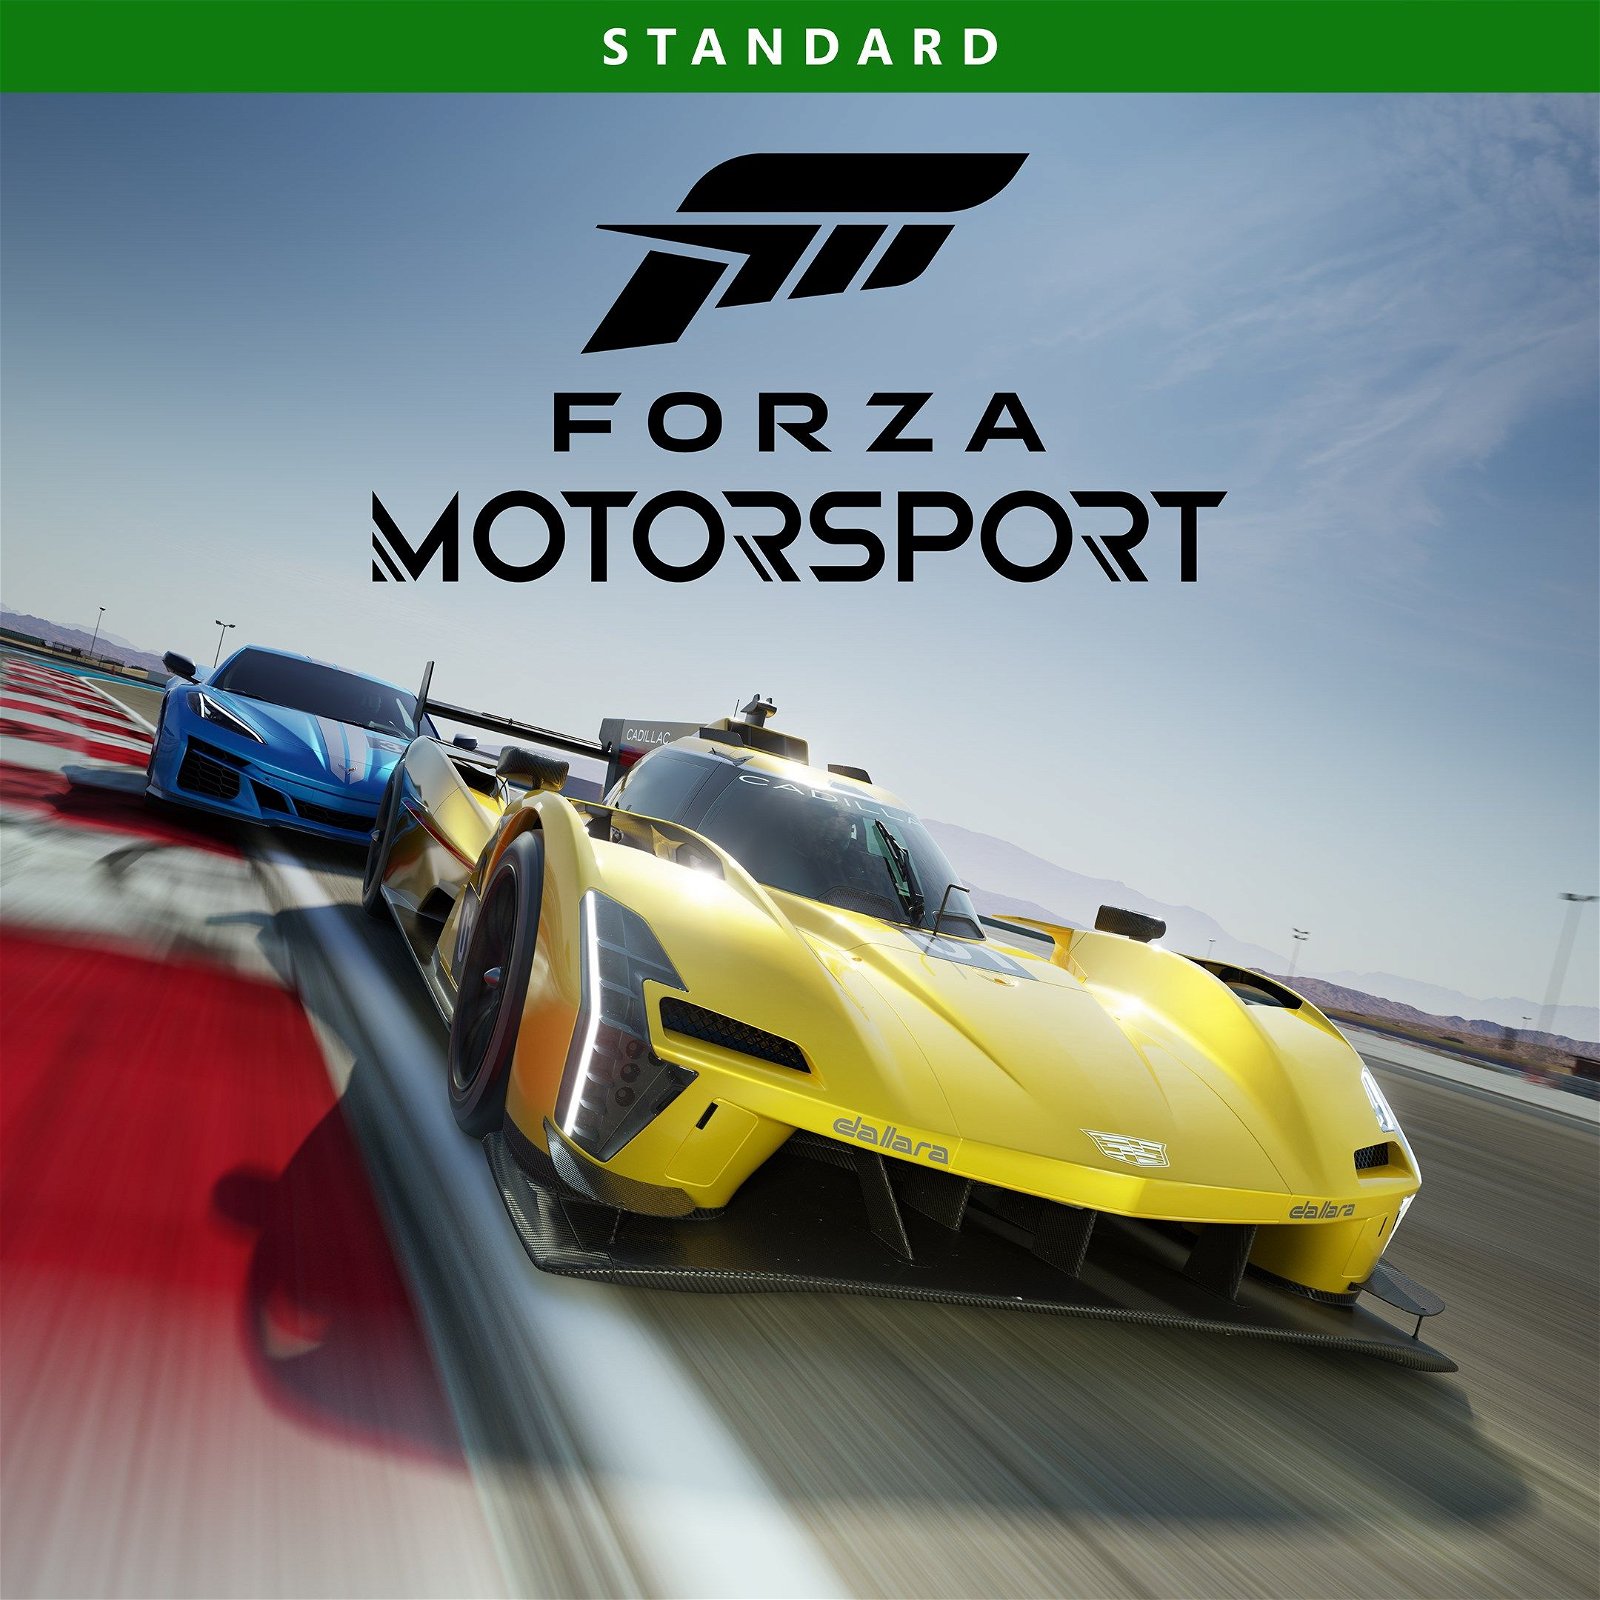 Image of Forza Motorsport Standard Edition